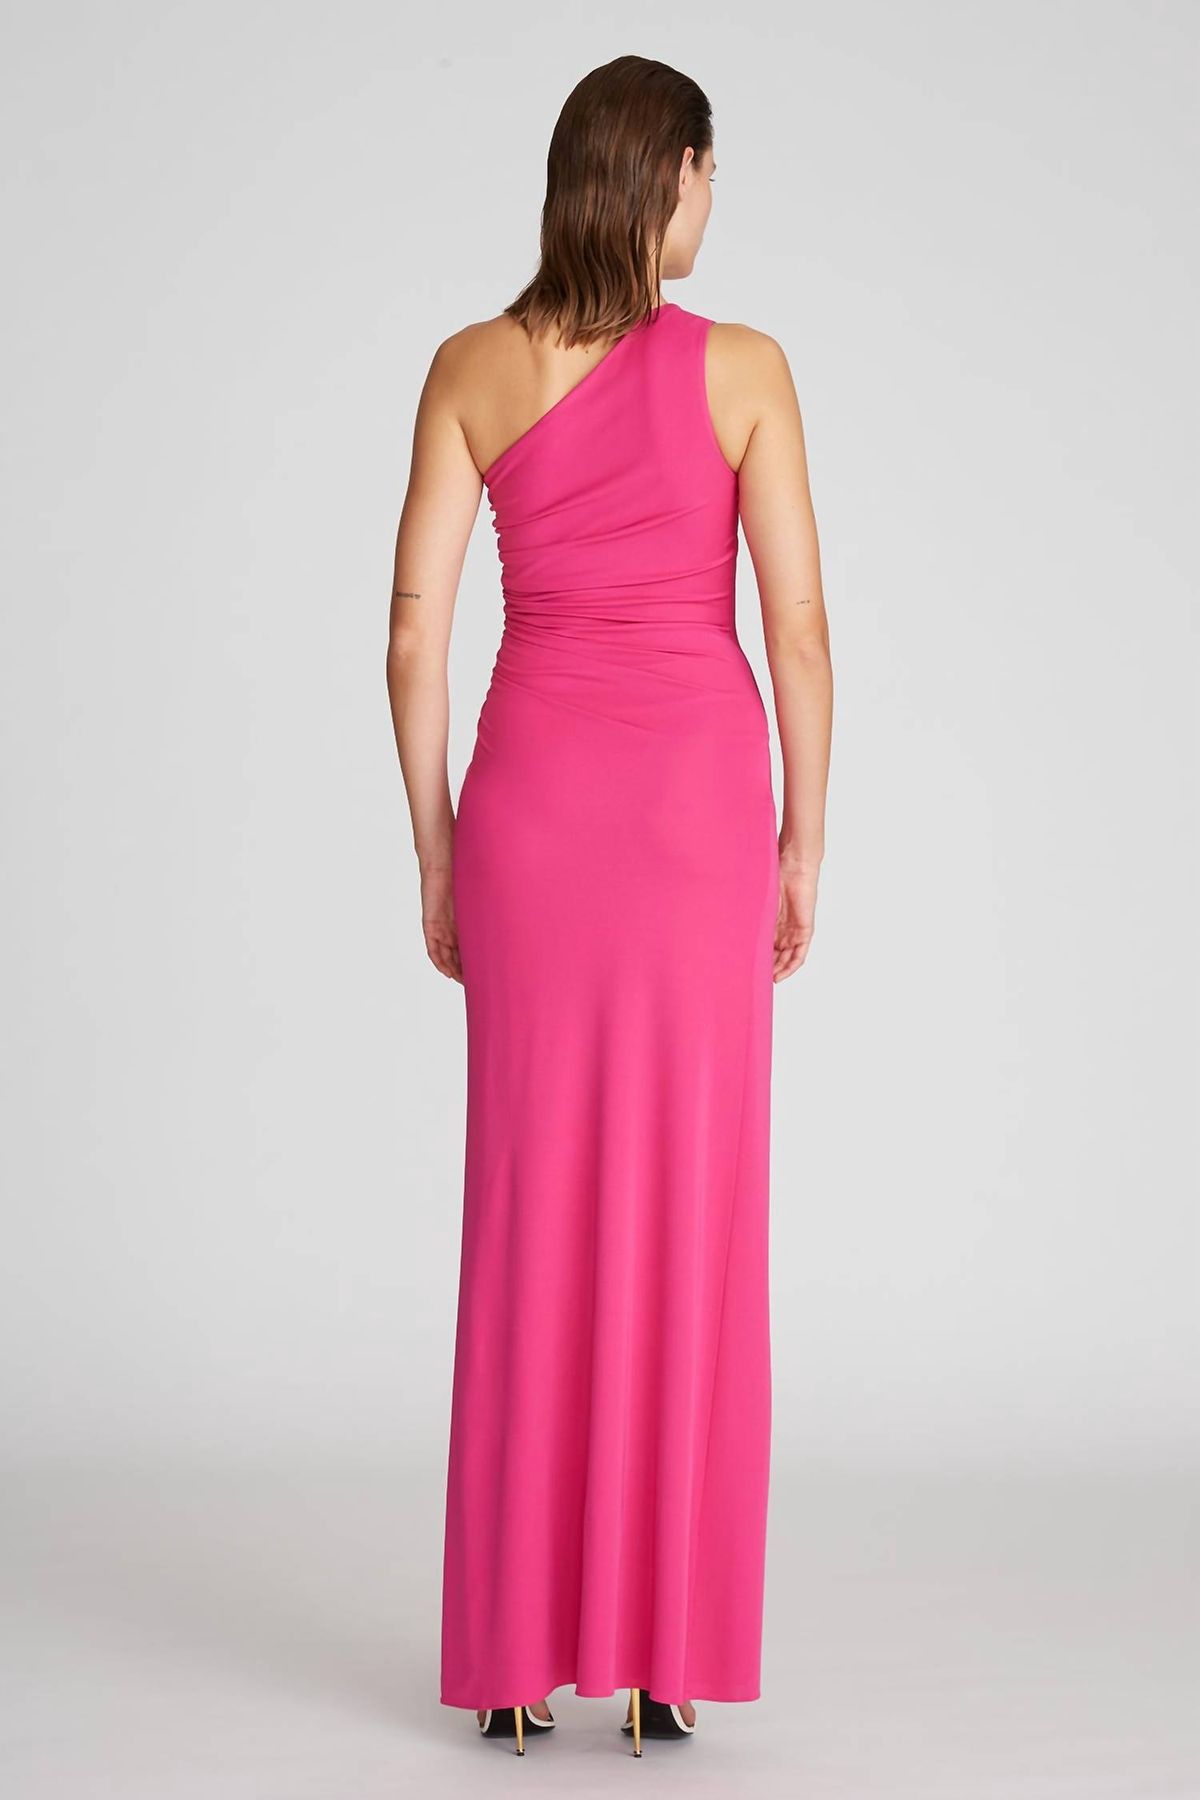 Style 1-3916124304-649 HALSTON HERITAGE Size 2 One Shoulder Pink Side Slit Dress on Queenly